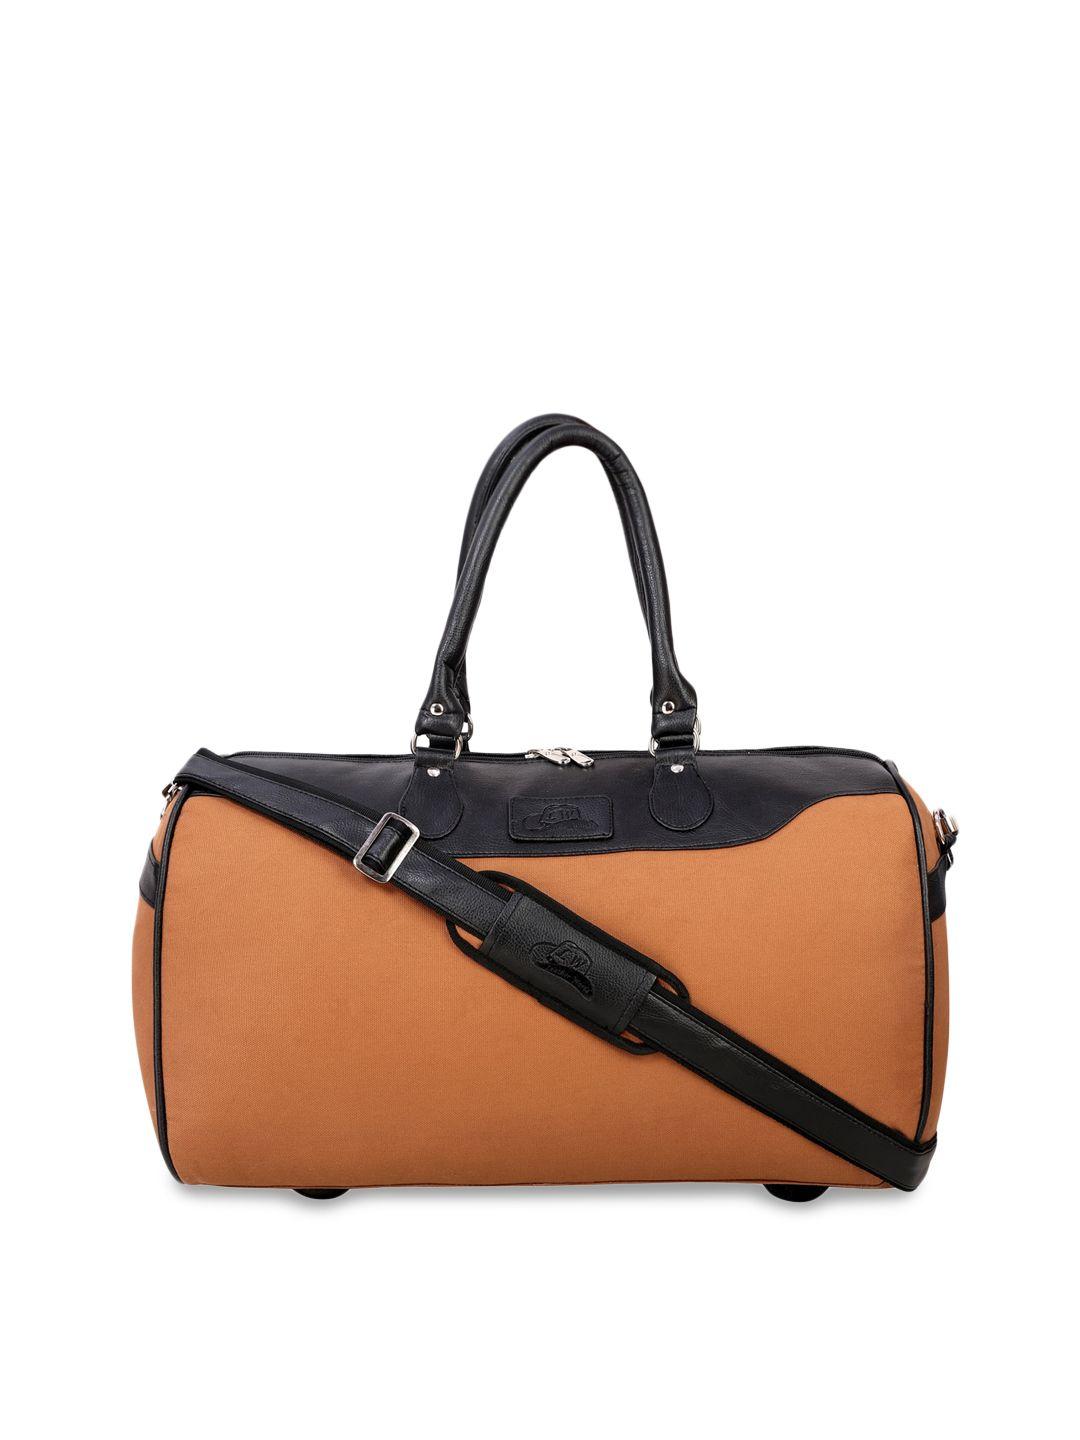 leather world tan brown & black solid duffel bag